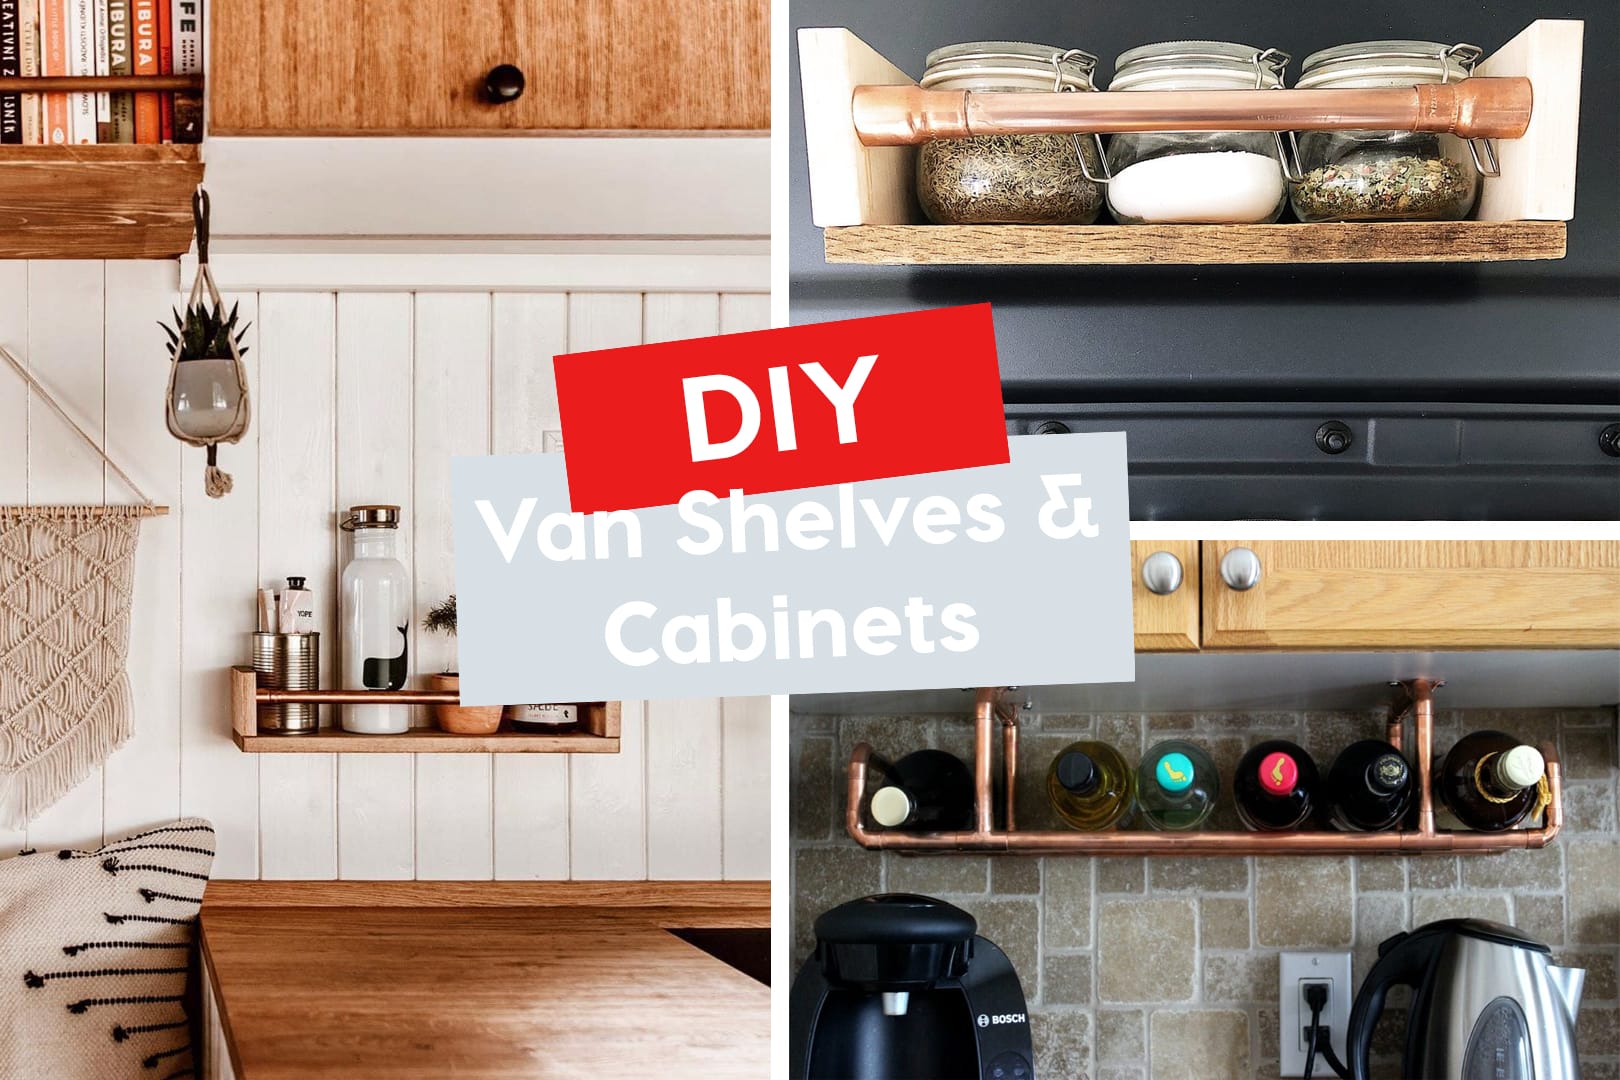 11 DIY van shelving and cabinet ideas - tinktube